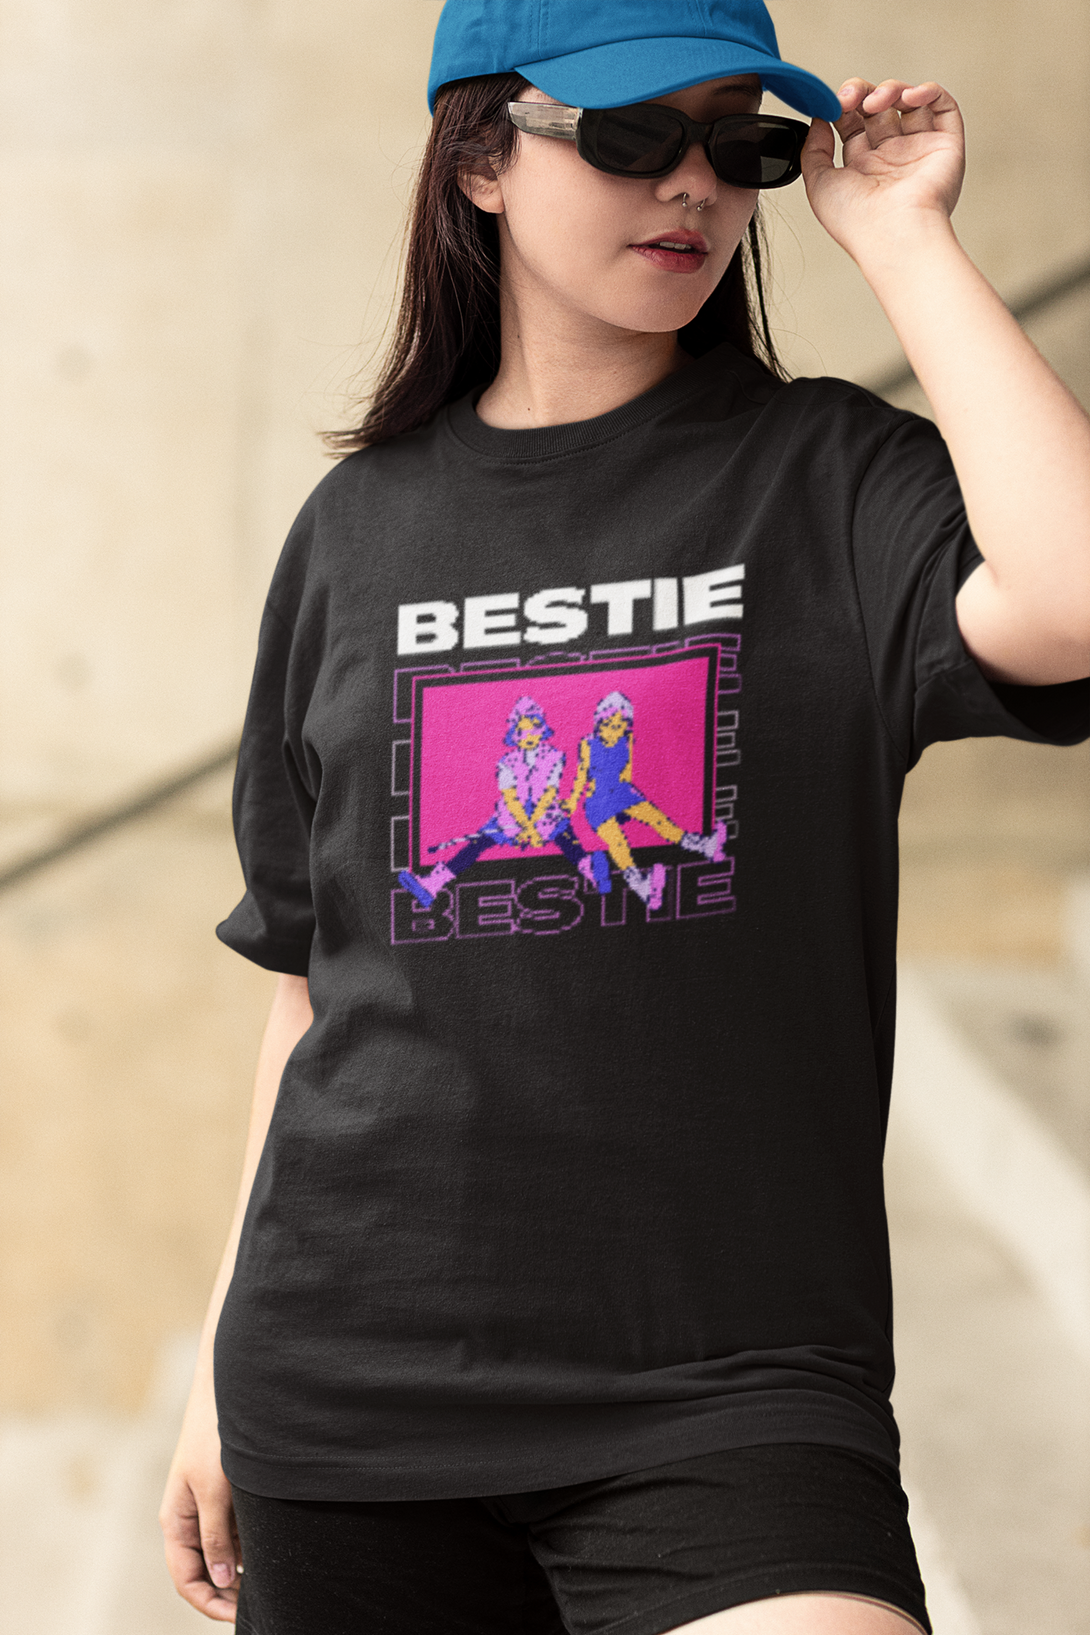 Bestie Bliss Printed Oversized T-Shirt For Women - WowWaves - 3